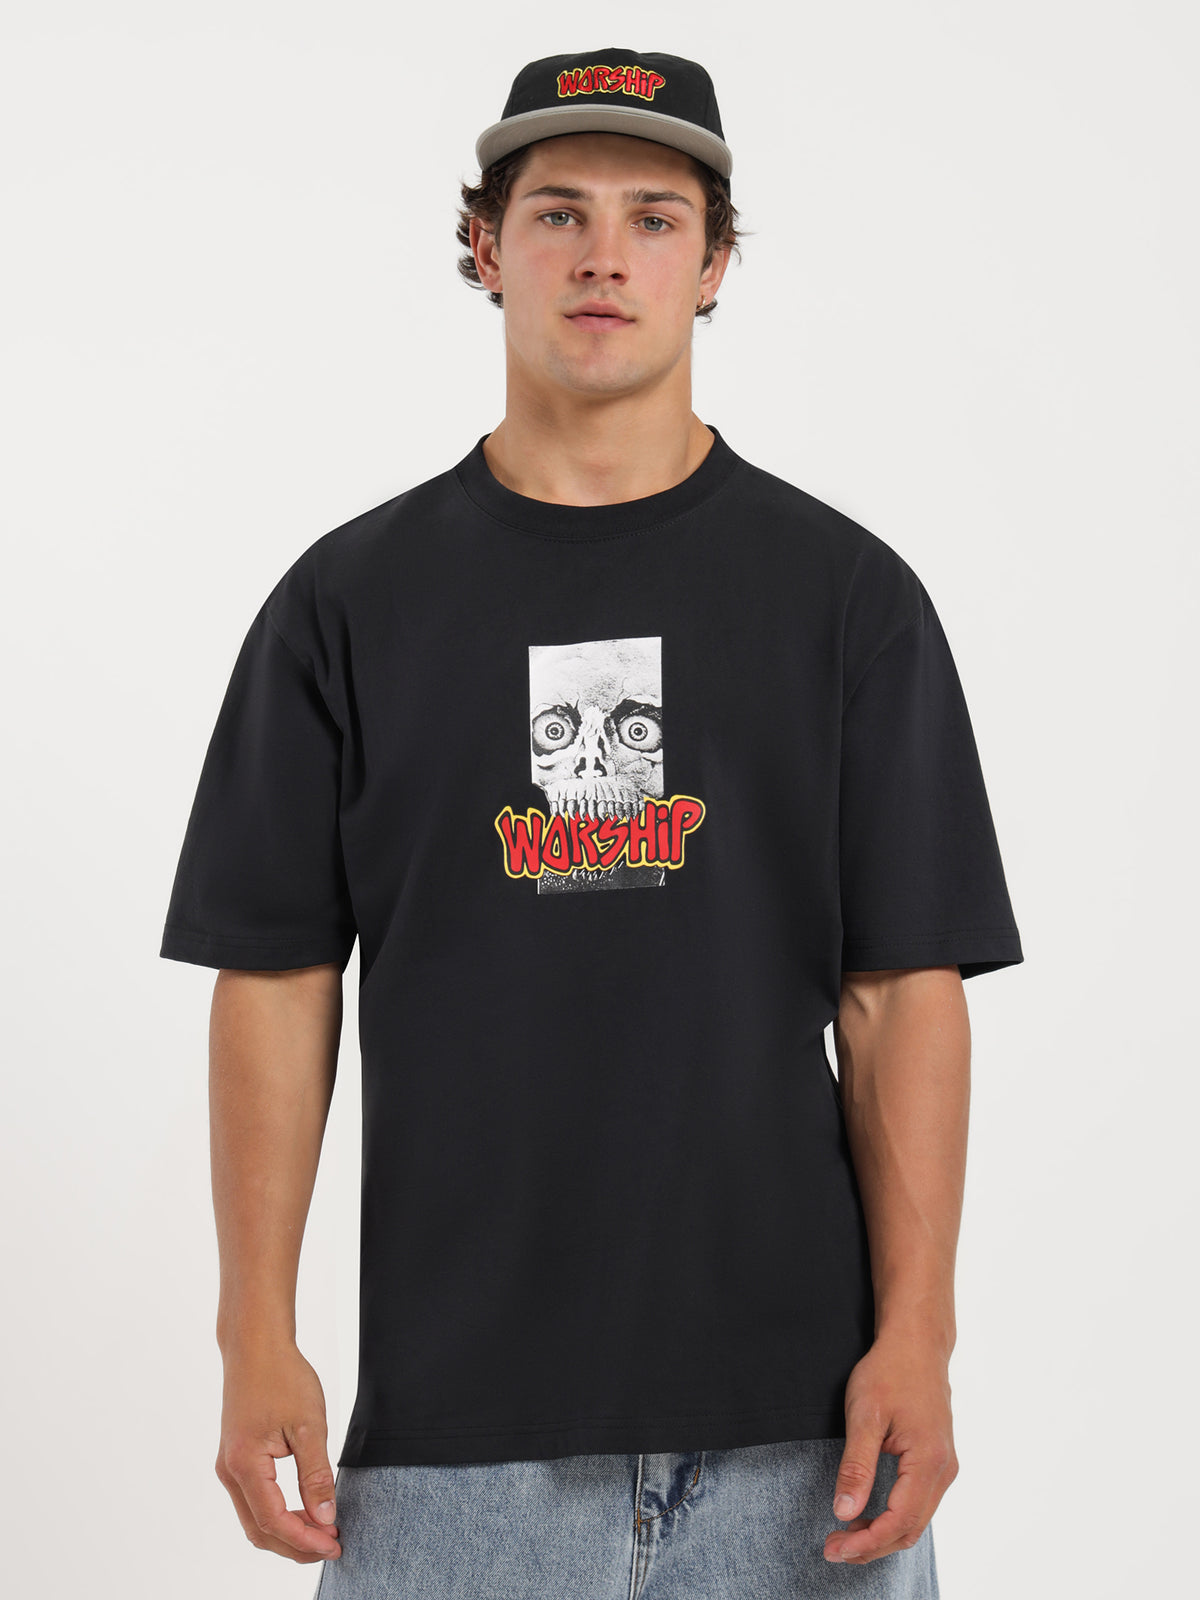 Crunch T-Shirt in Black